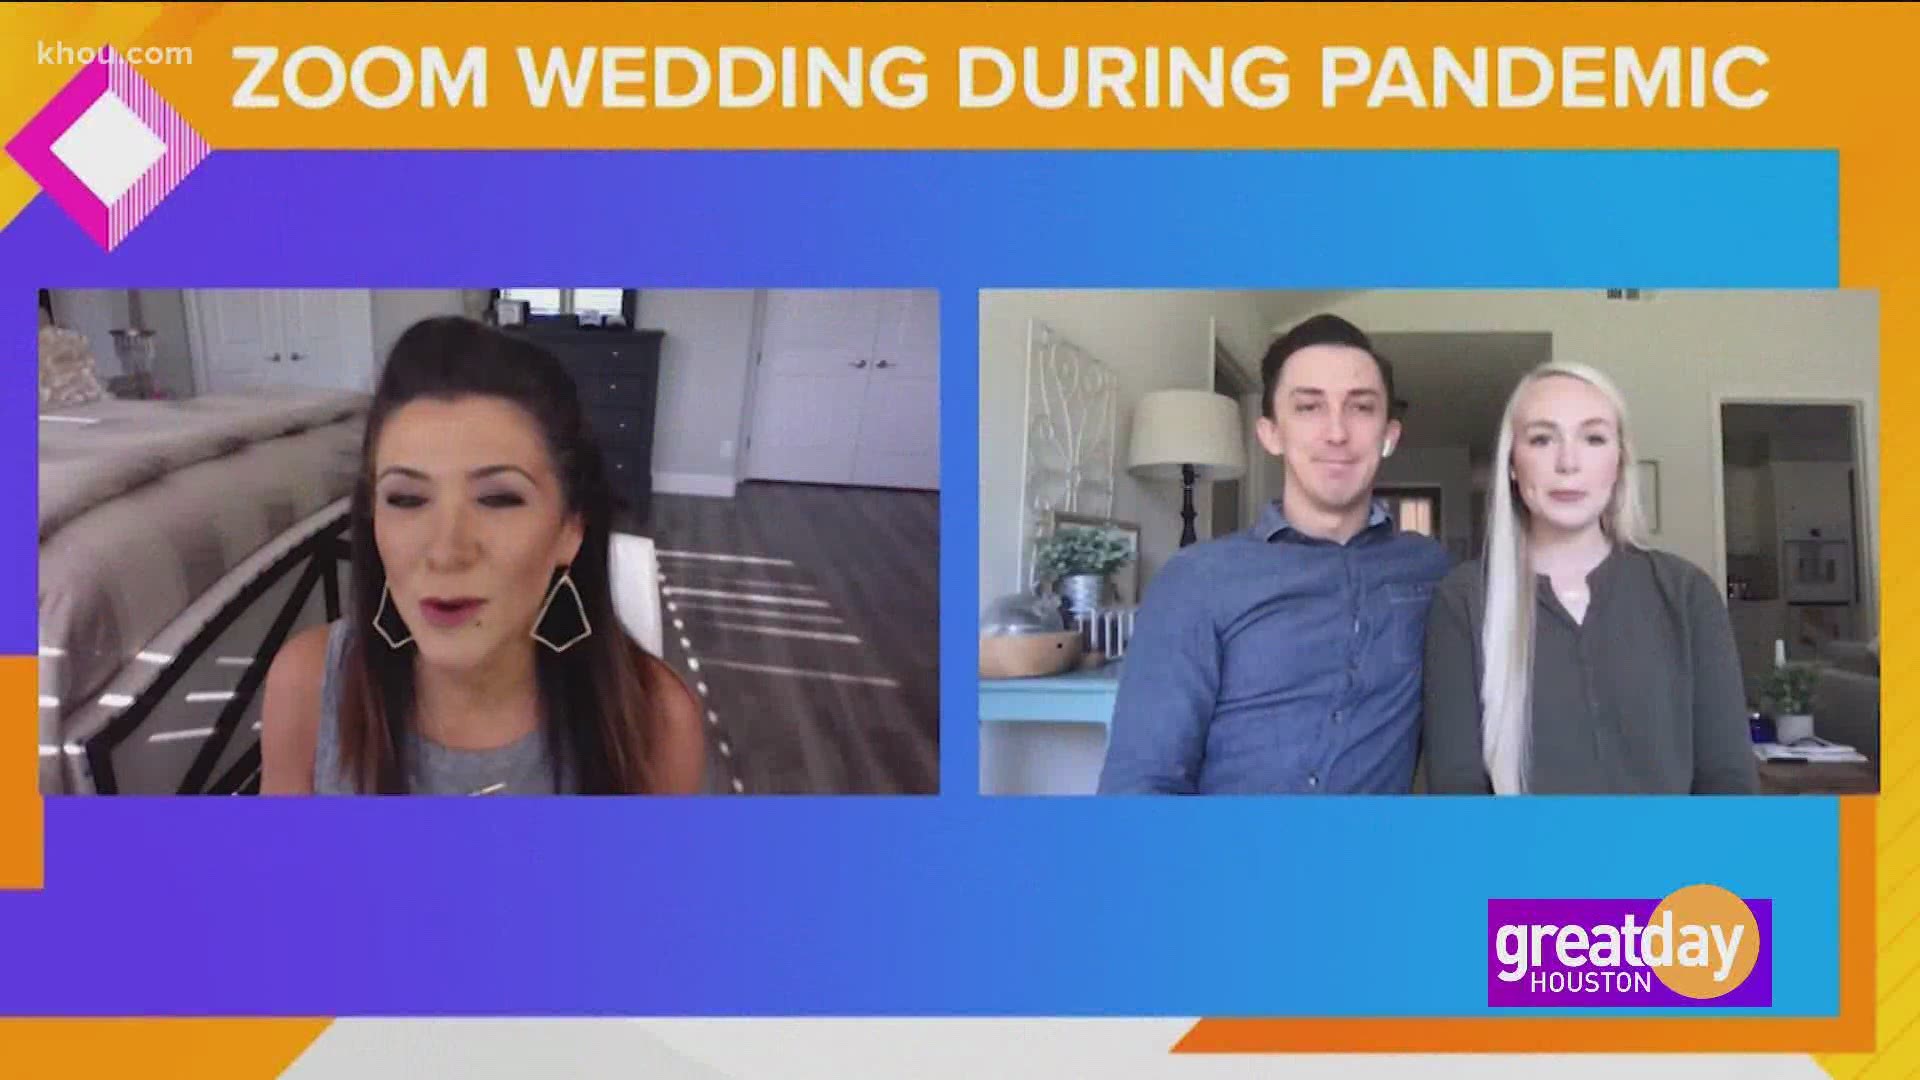 Doug and Jami Adams have a quarantine wedding over zoom